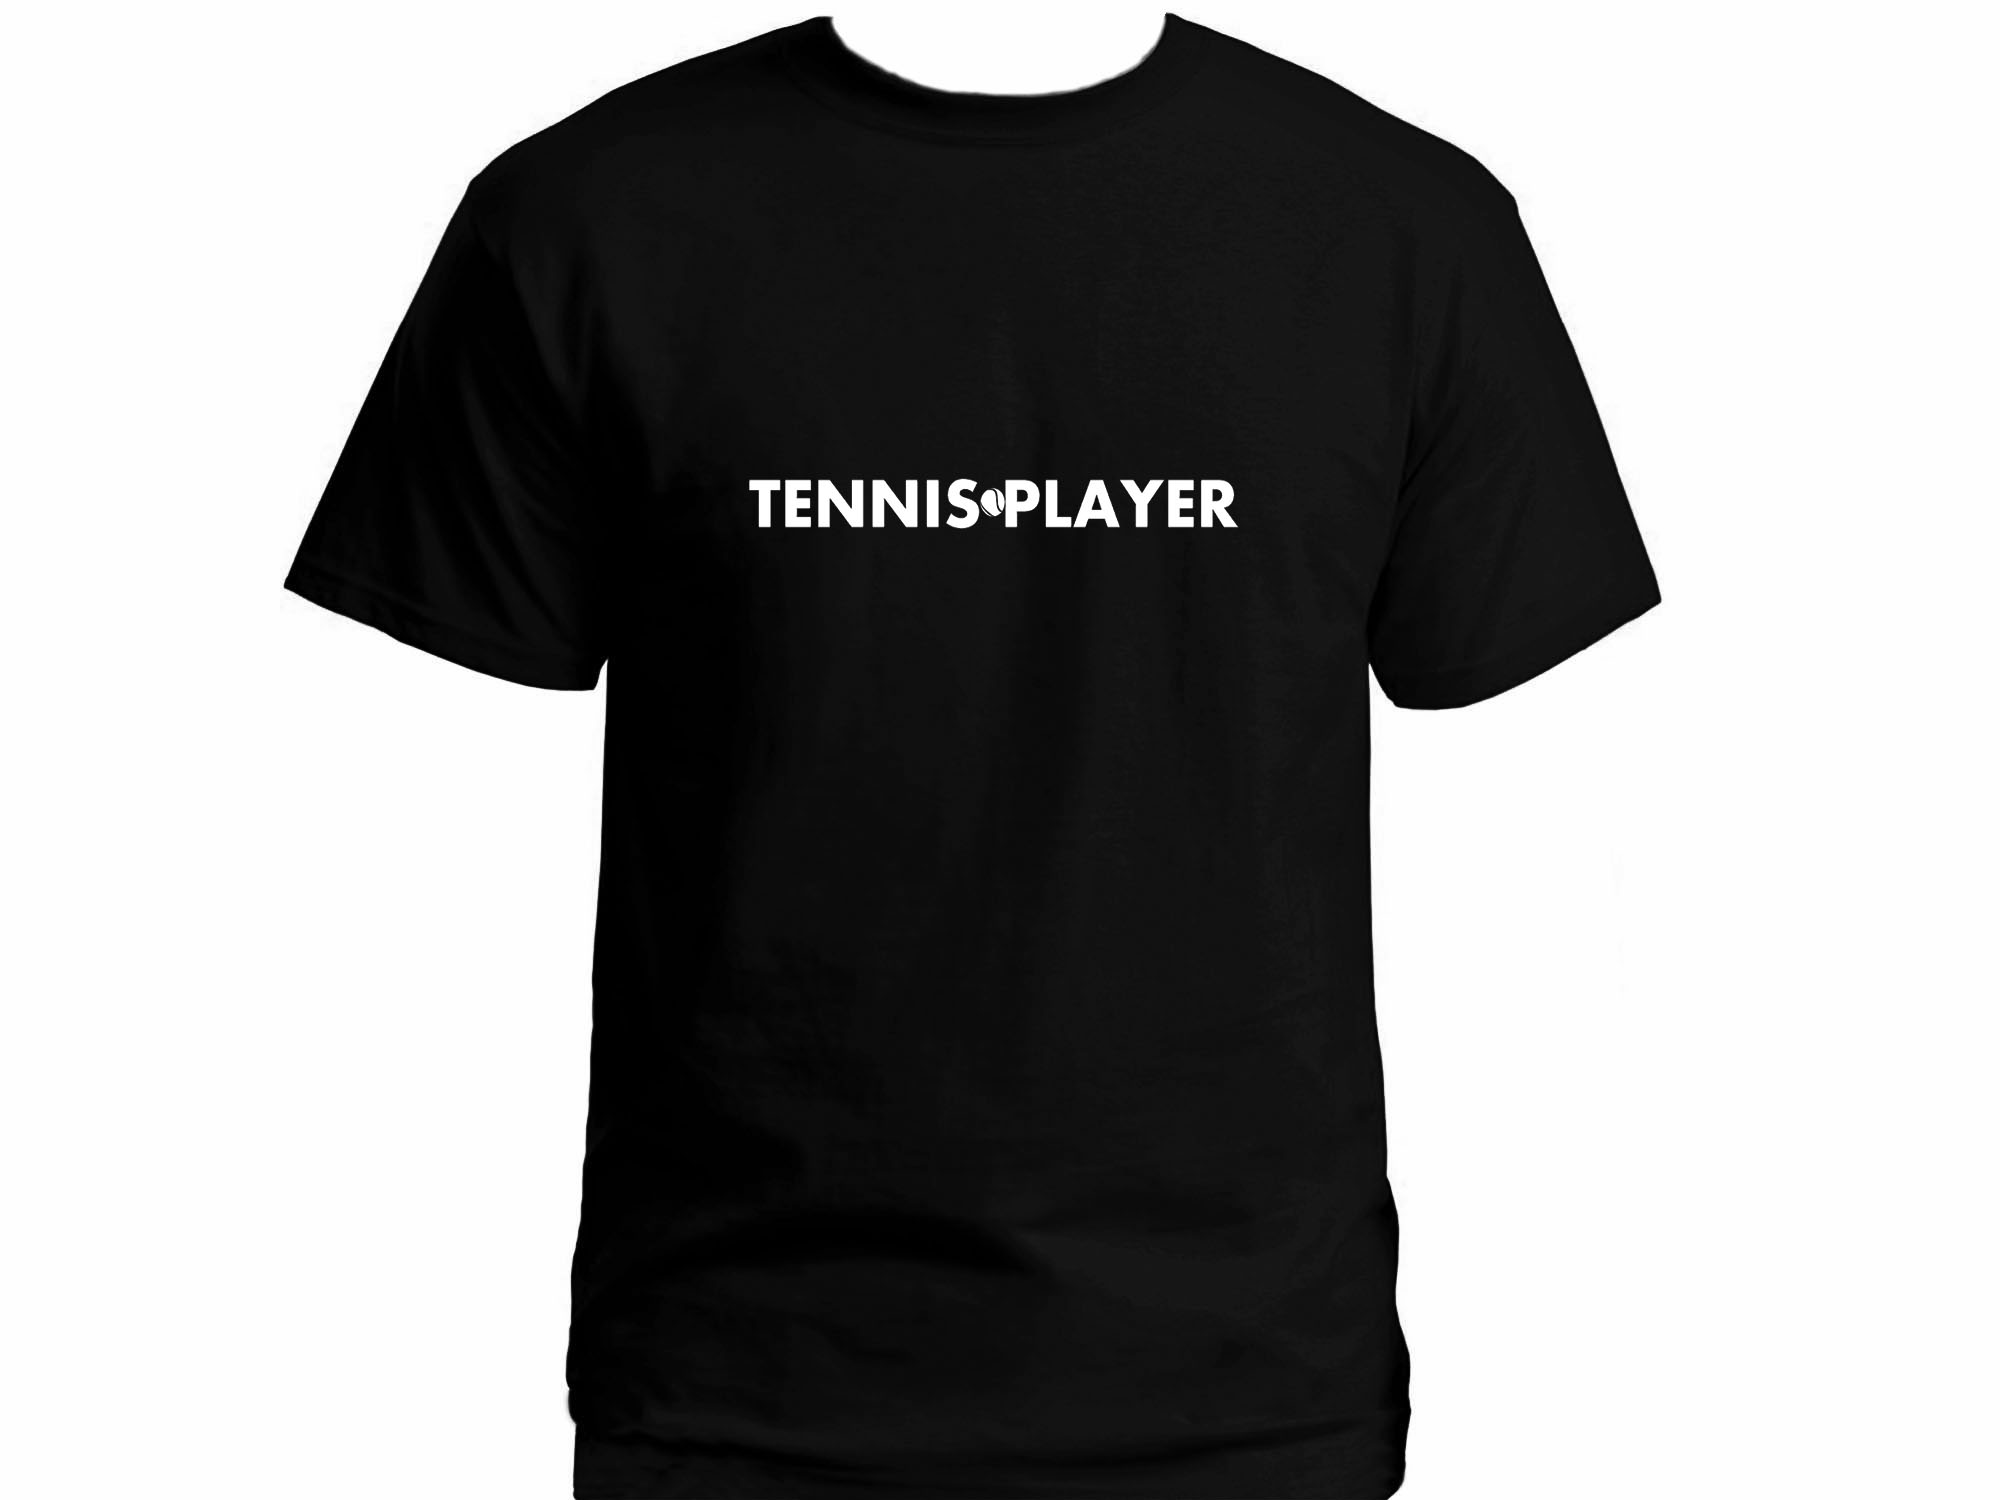 Tennis player 100% cotton black new t-shirt